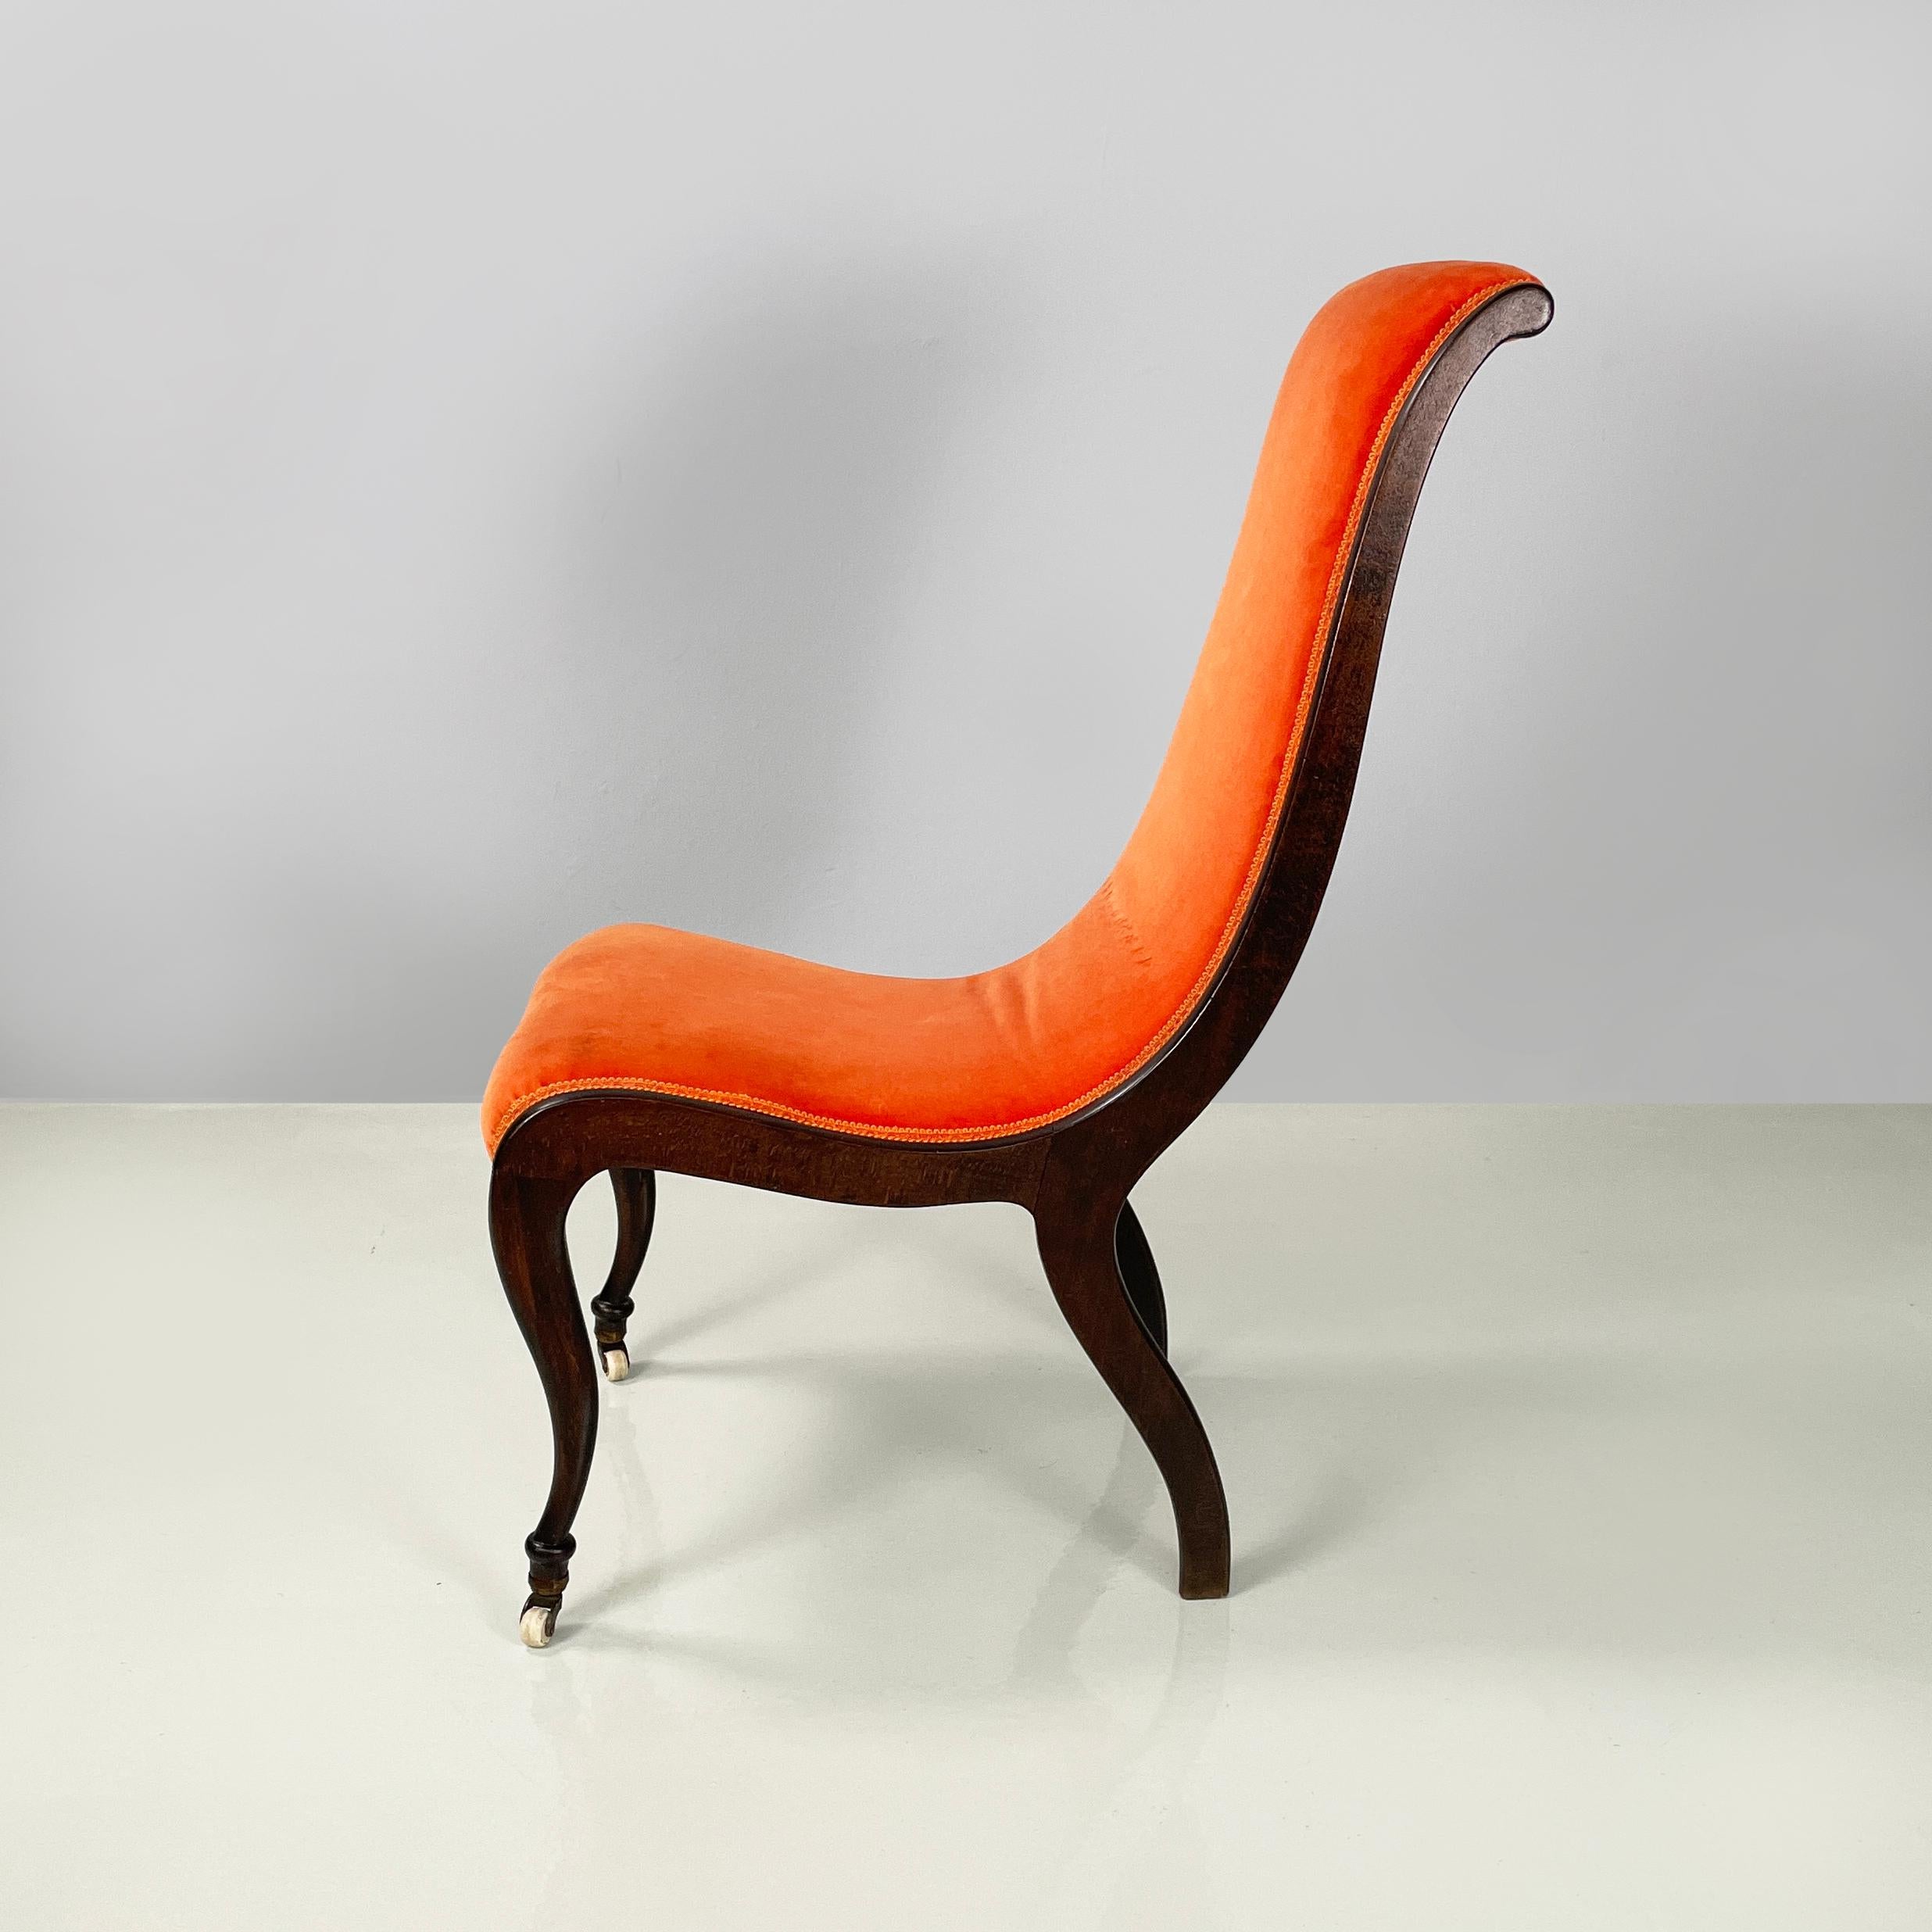 Mid-Century Modern Danish mid-century modern Chair in orange velvet and dark wood, 1950s For Sale